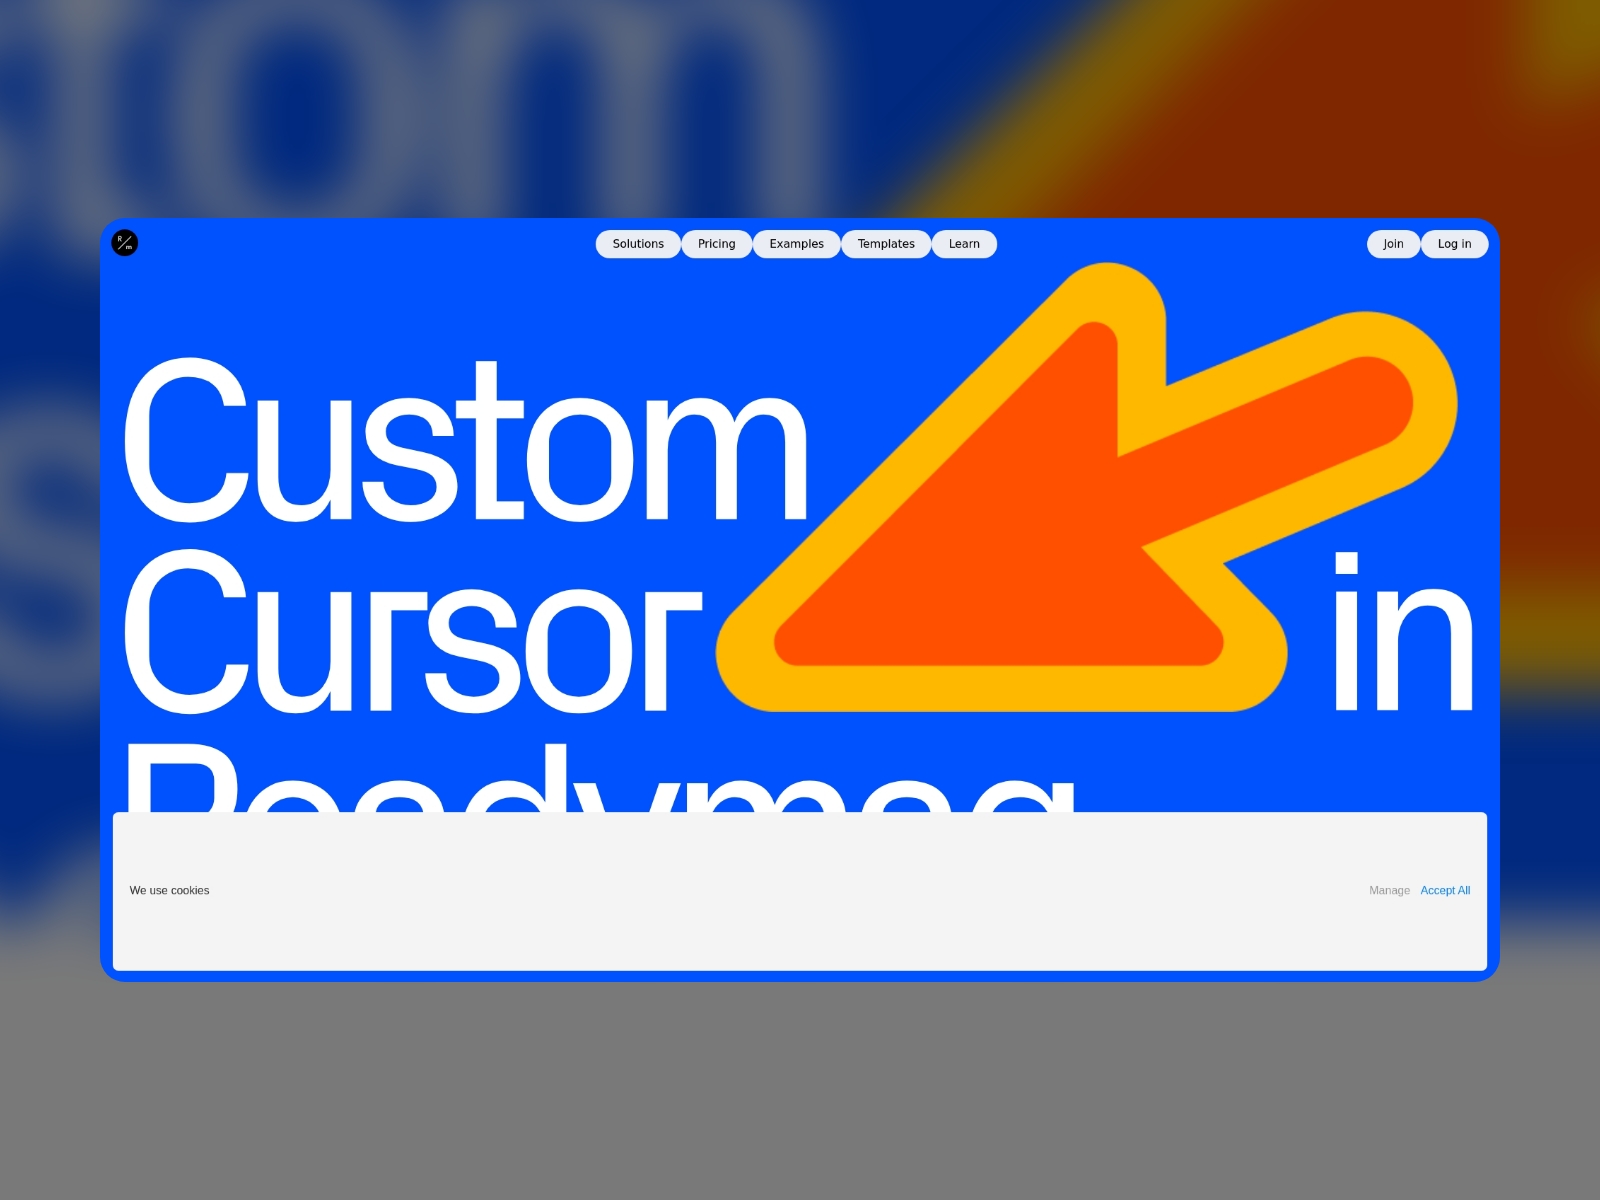 Custom cursor - Awwwards Honorable Mention